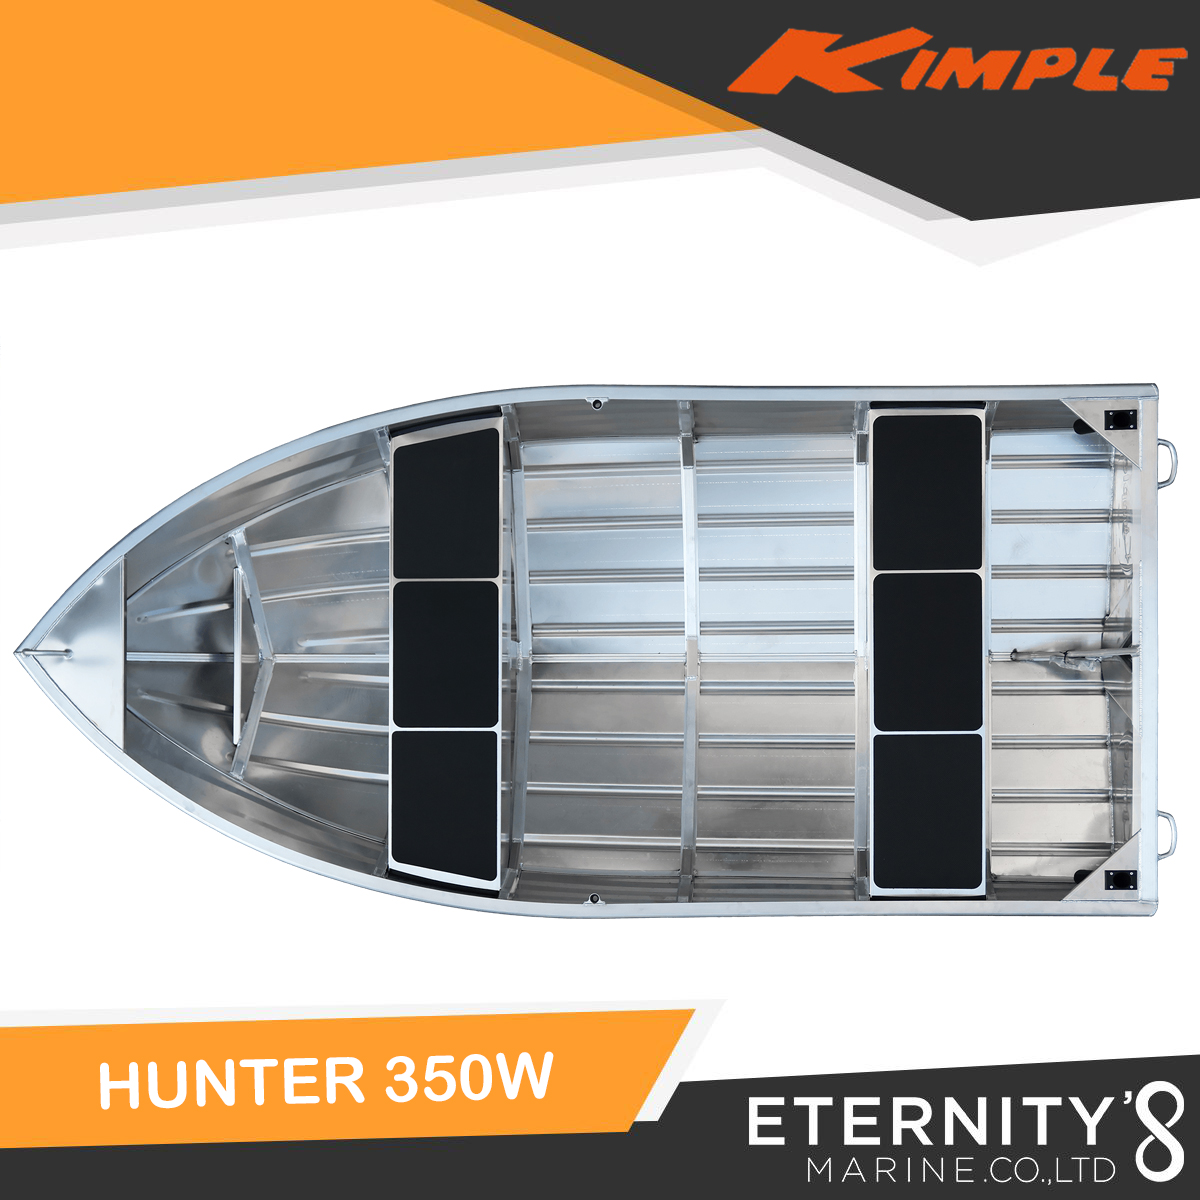 Kimple 350 Hunter W